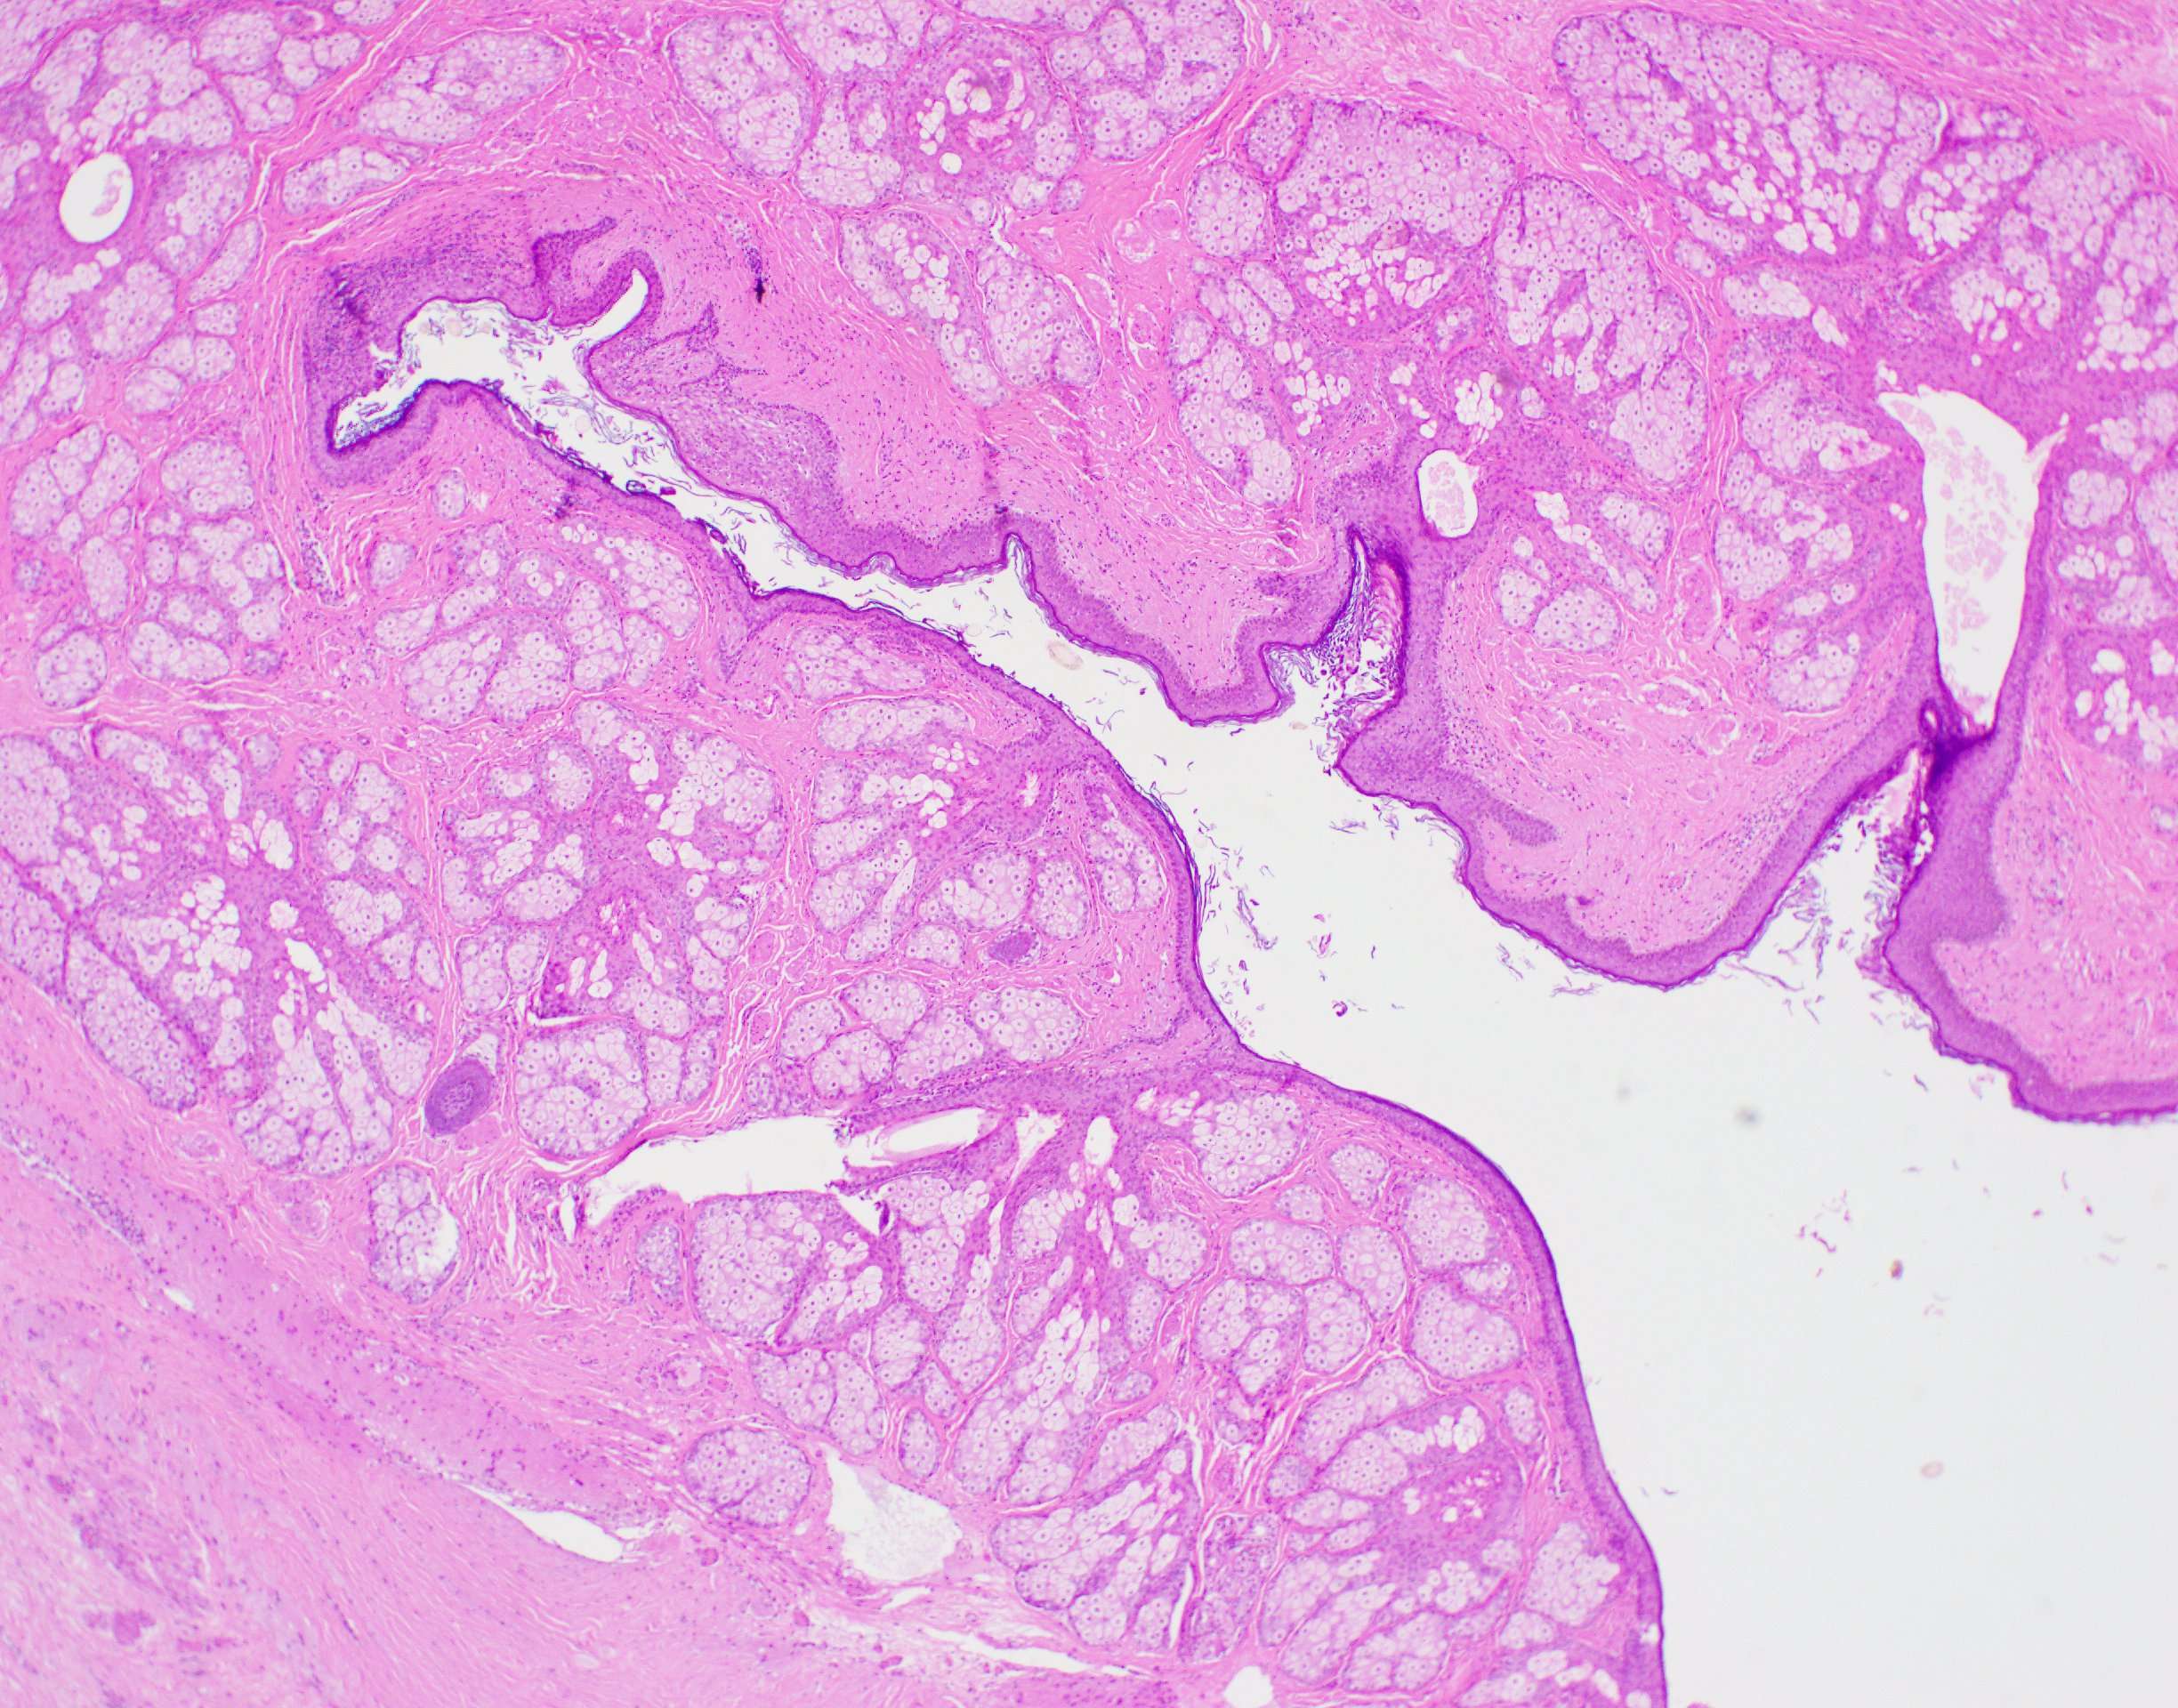 Cystic mature teratoma 4x 2